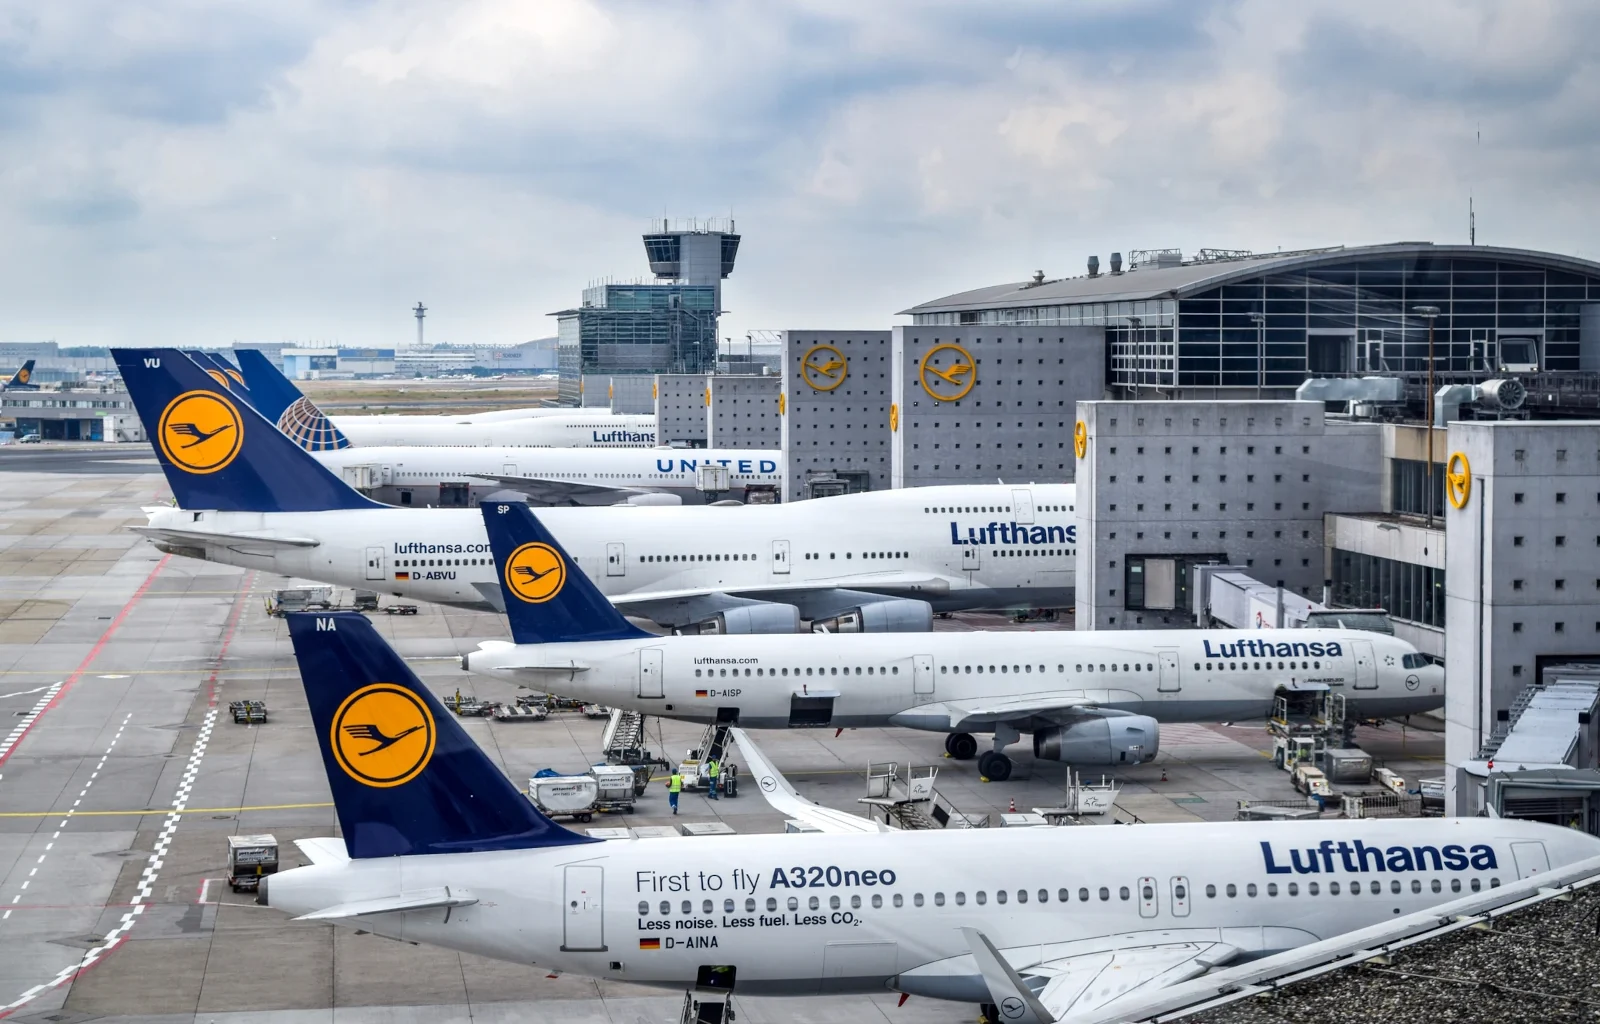 Lufthansa Aircraft Park am Frankfurter Flughafen